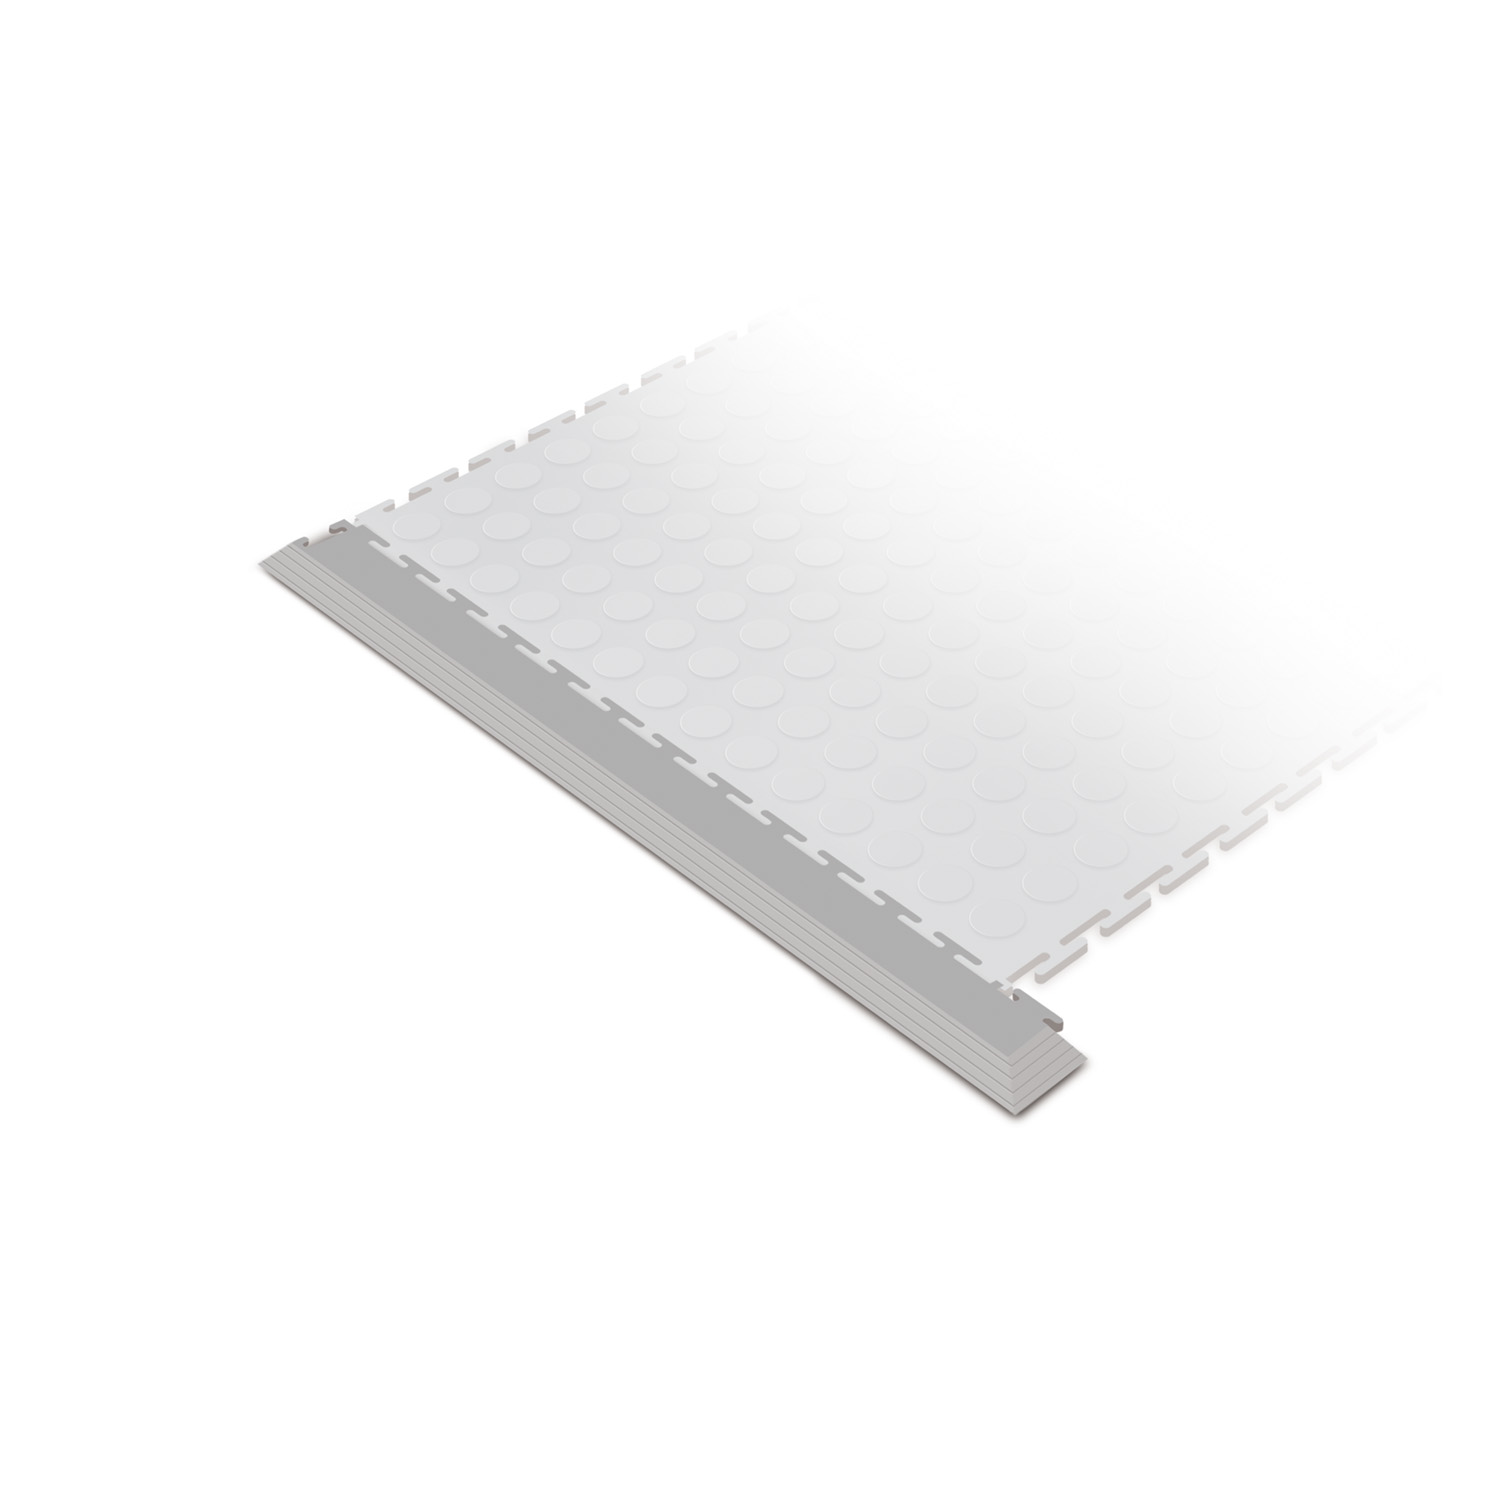 Standard corner edge ramp tile (light grey)